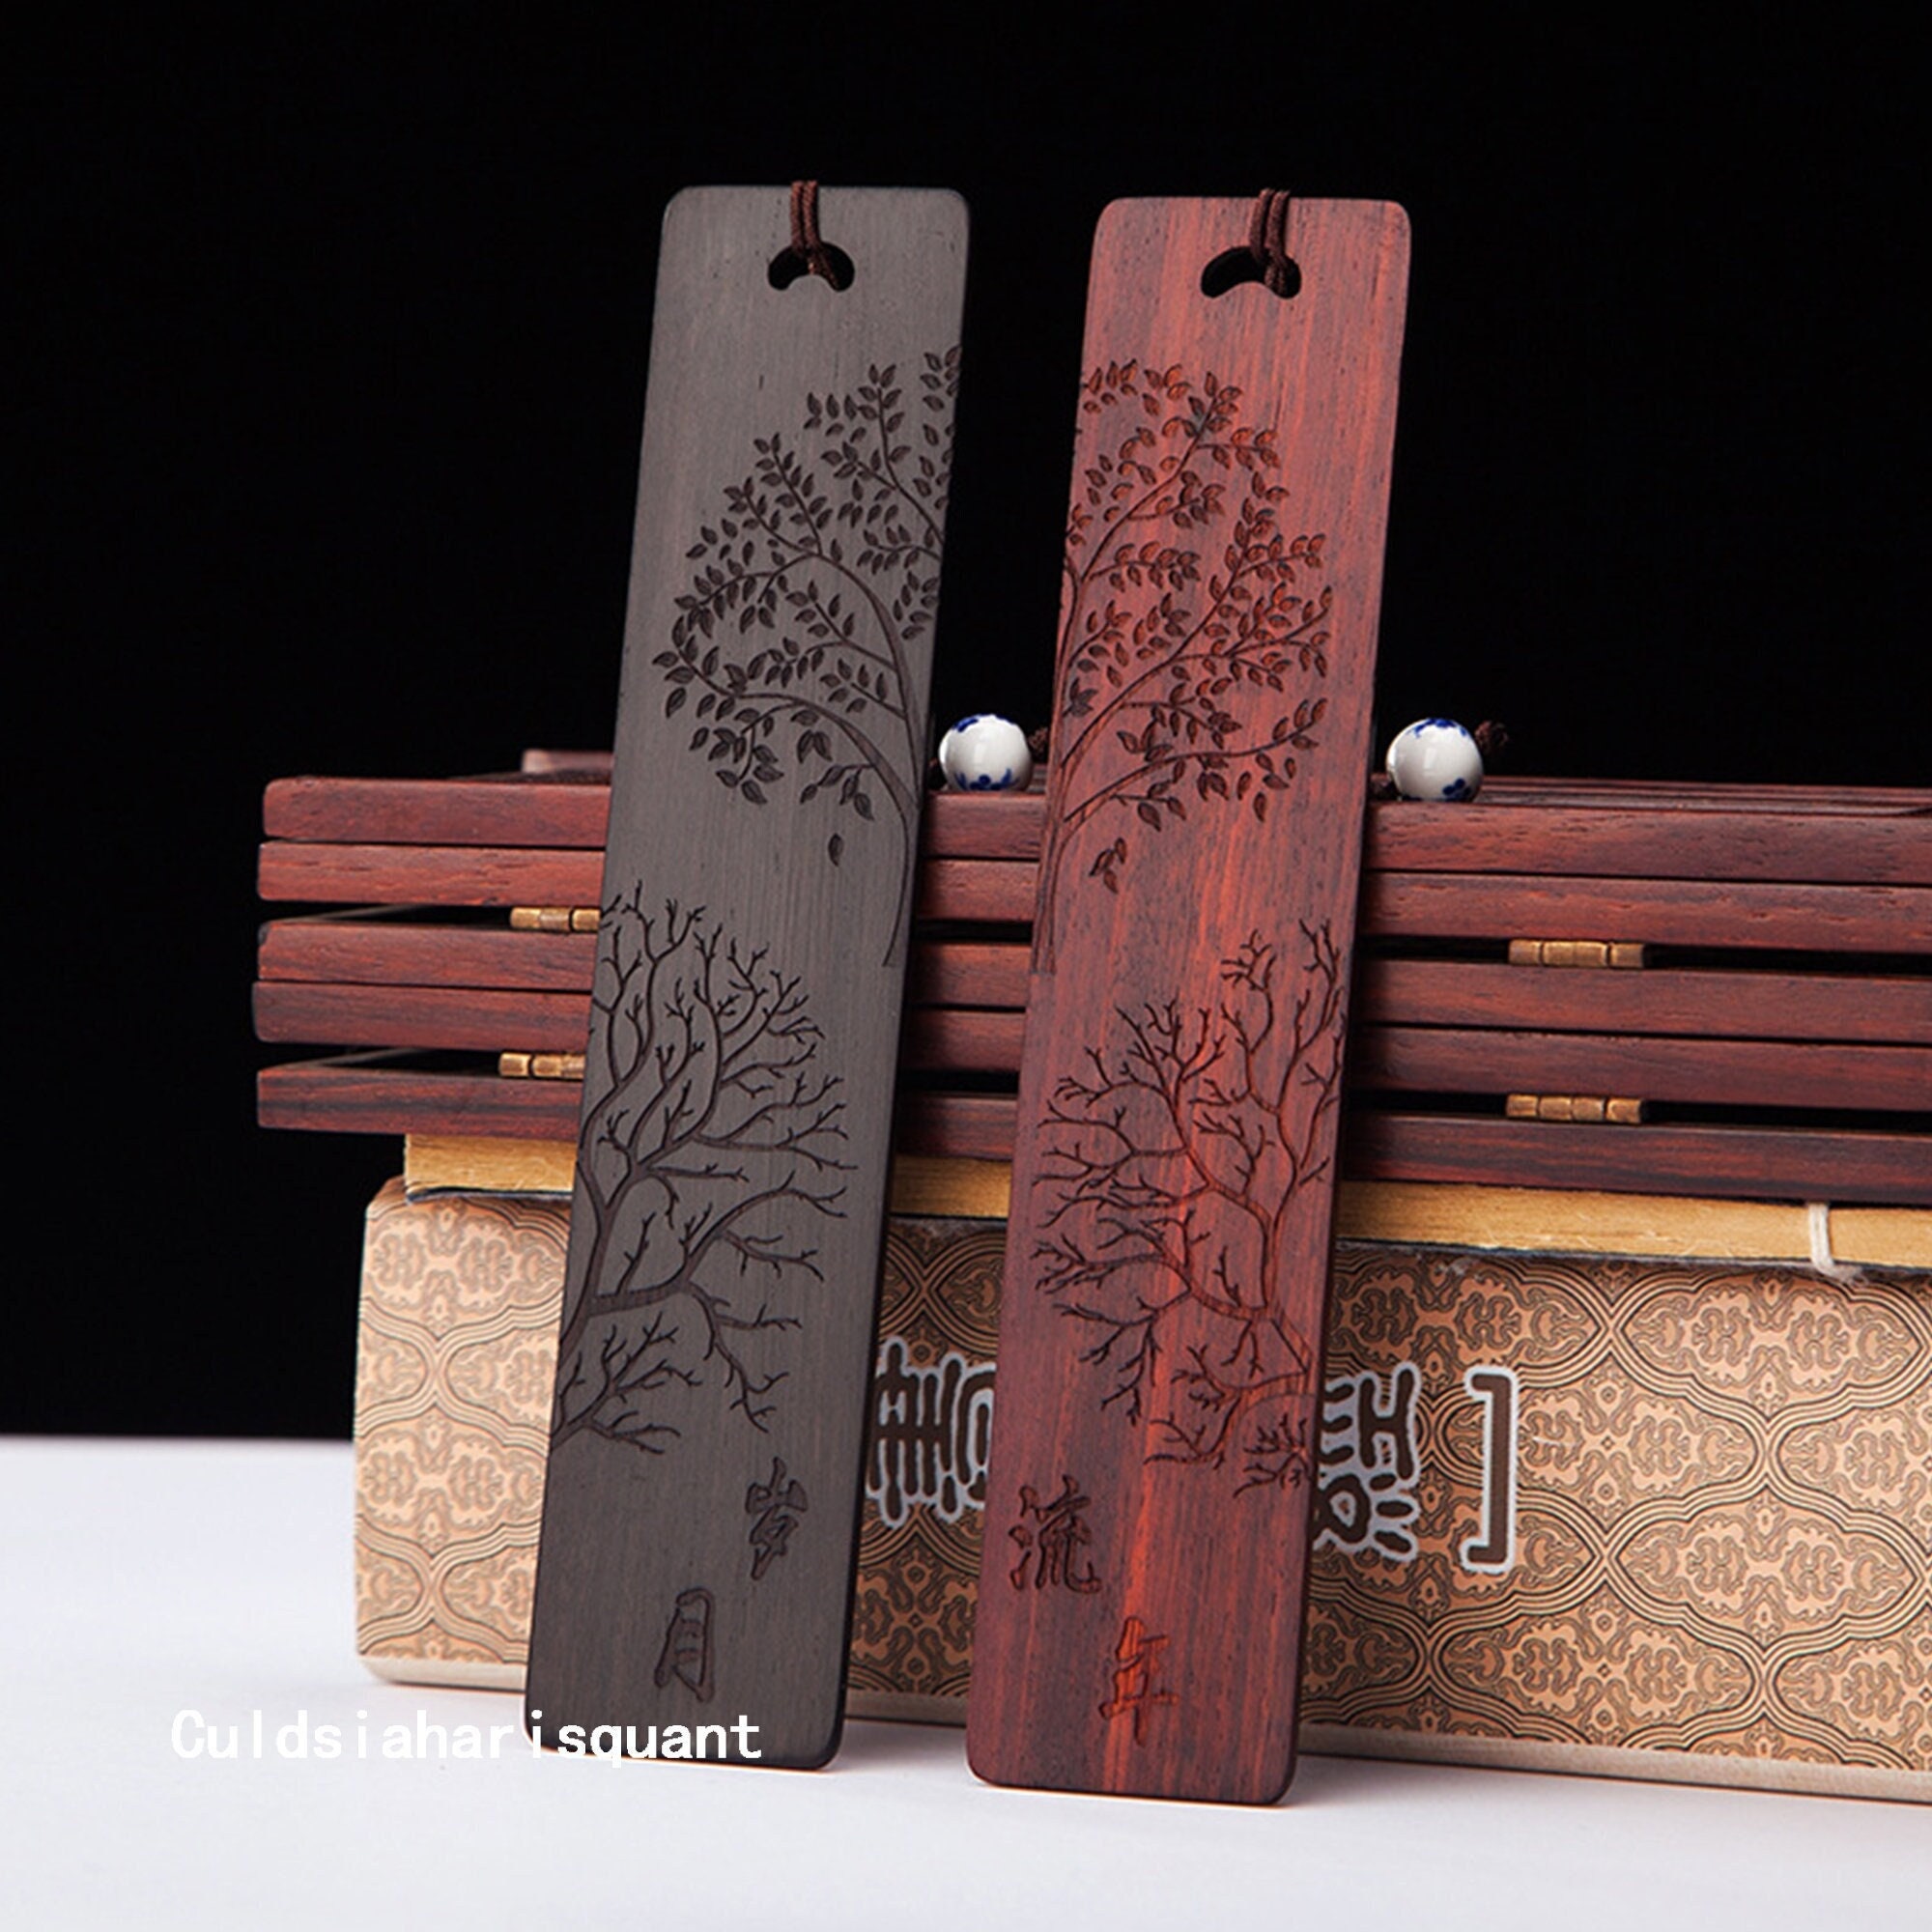 Chinese Family Love Artwork Handmade Wooden Bookmark